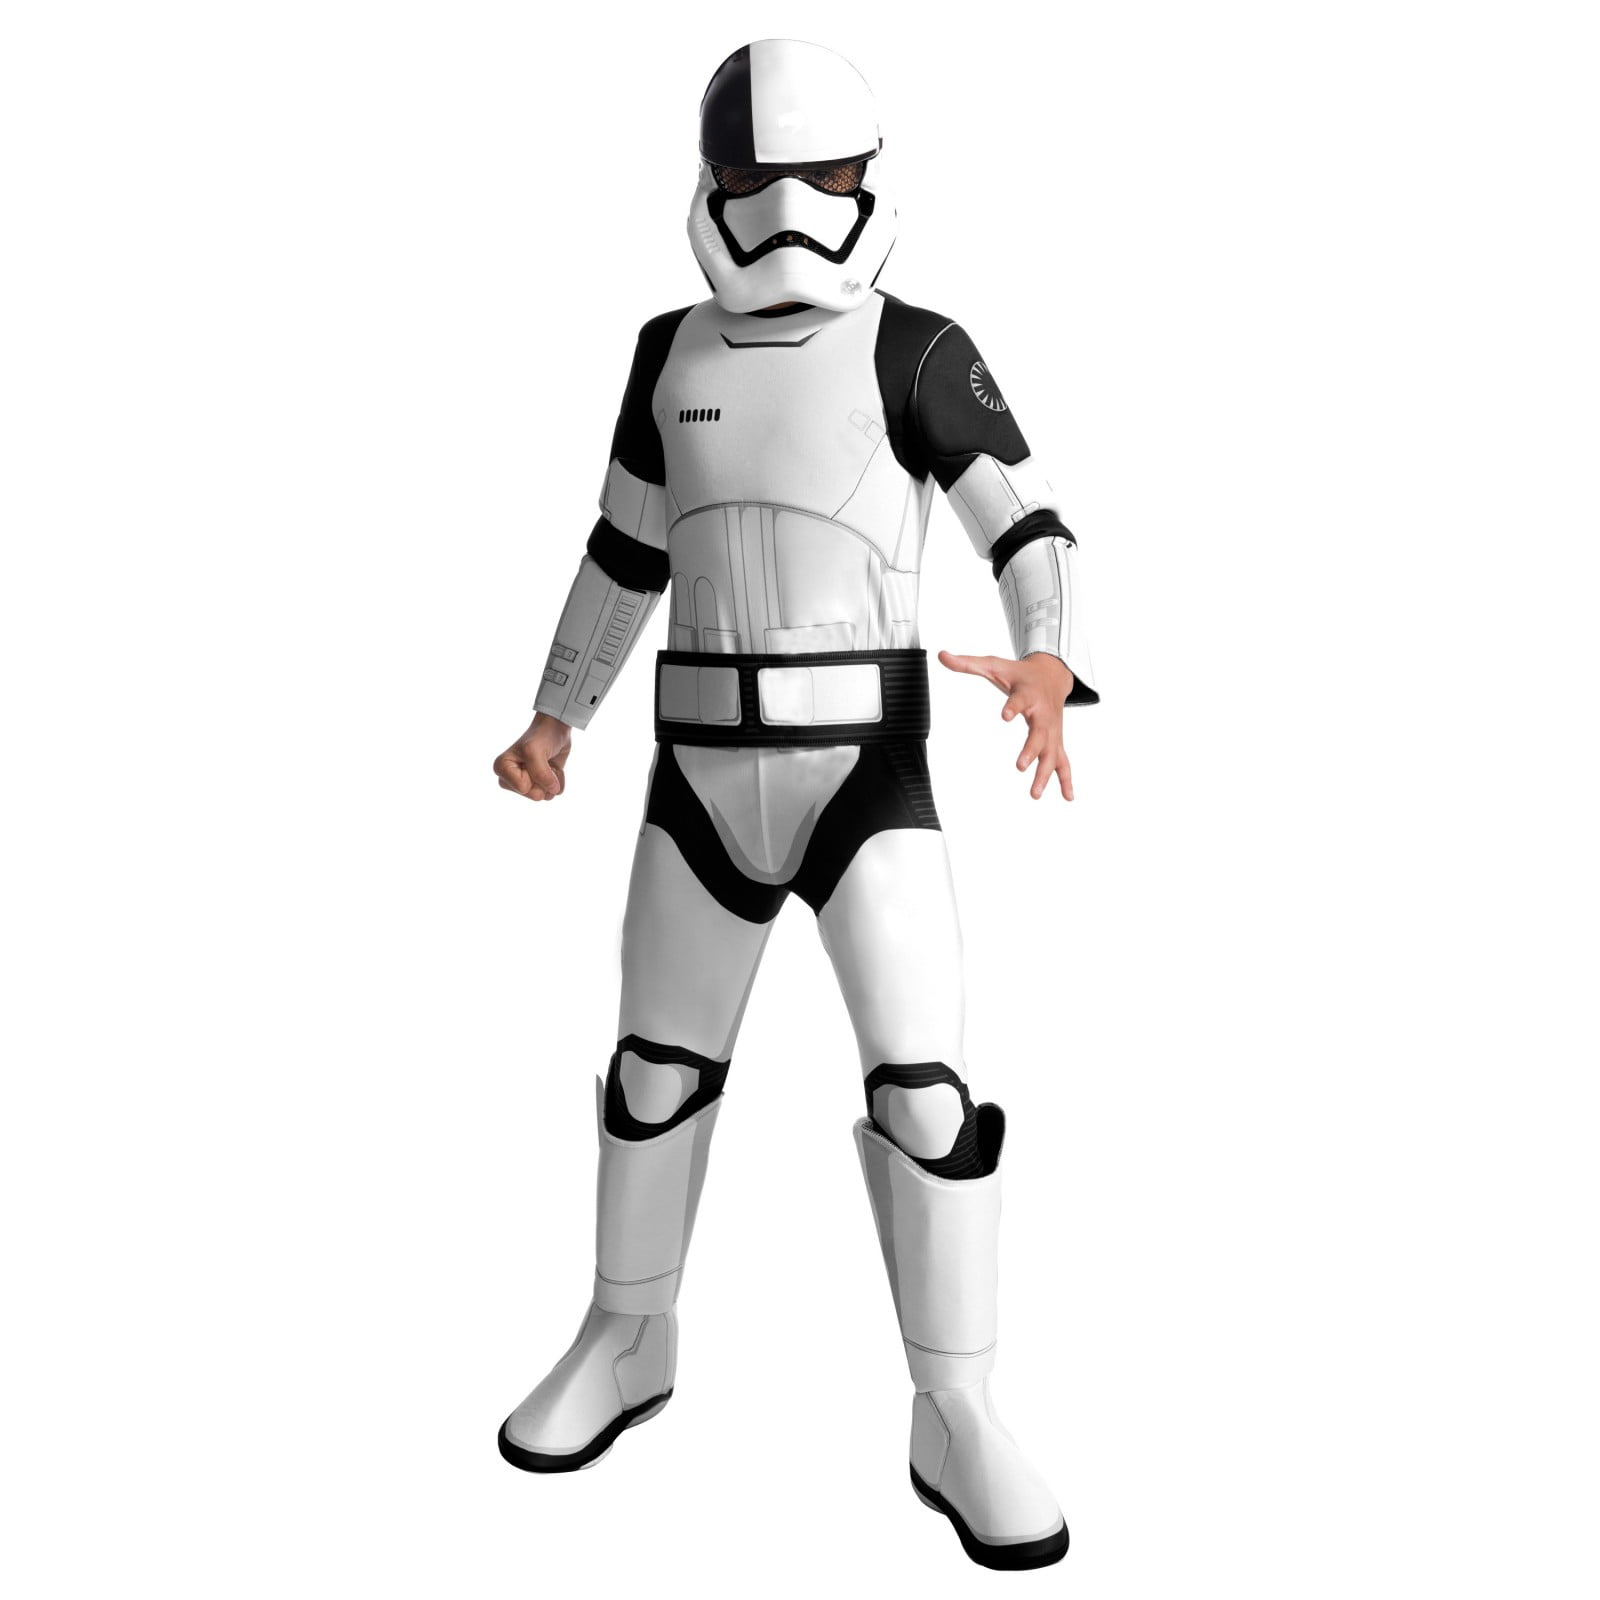 New Star Wars "The Last Jedi" Executioner Trooper Deluxe Child Costume M 8-10 